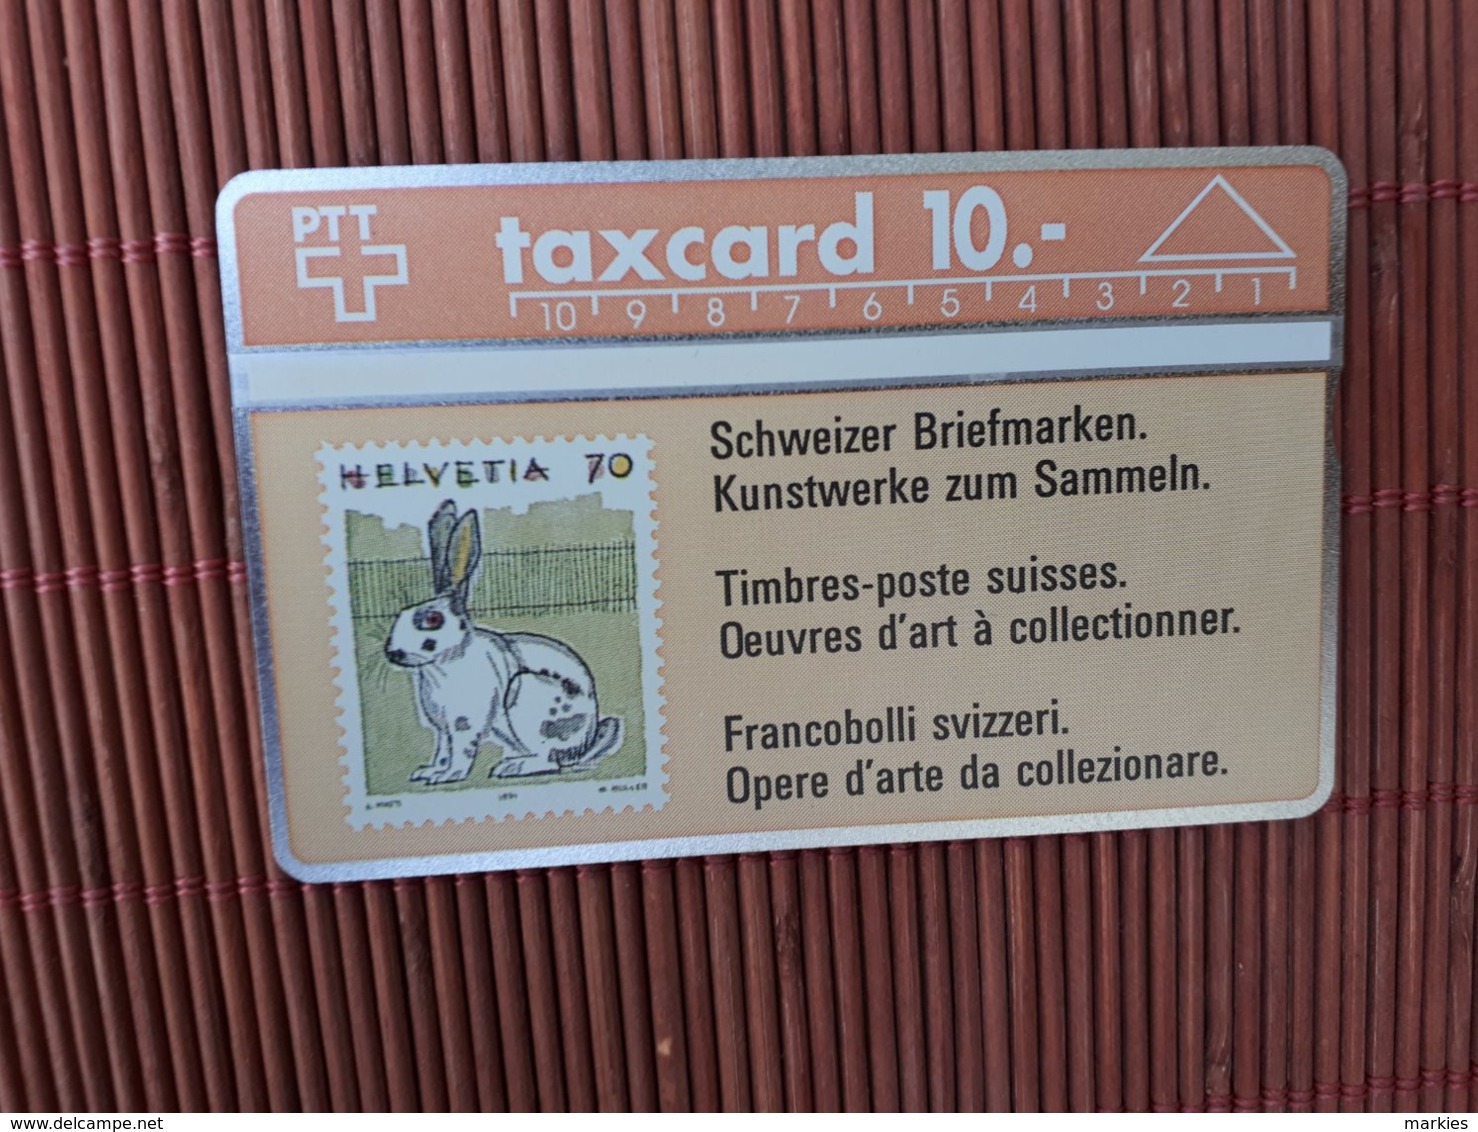 Phonecard PZwitserland 202C (Mint,Neuve) Rare - Suisse